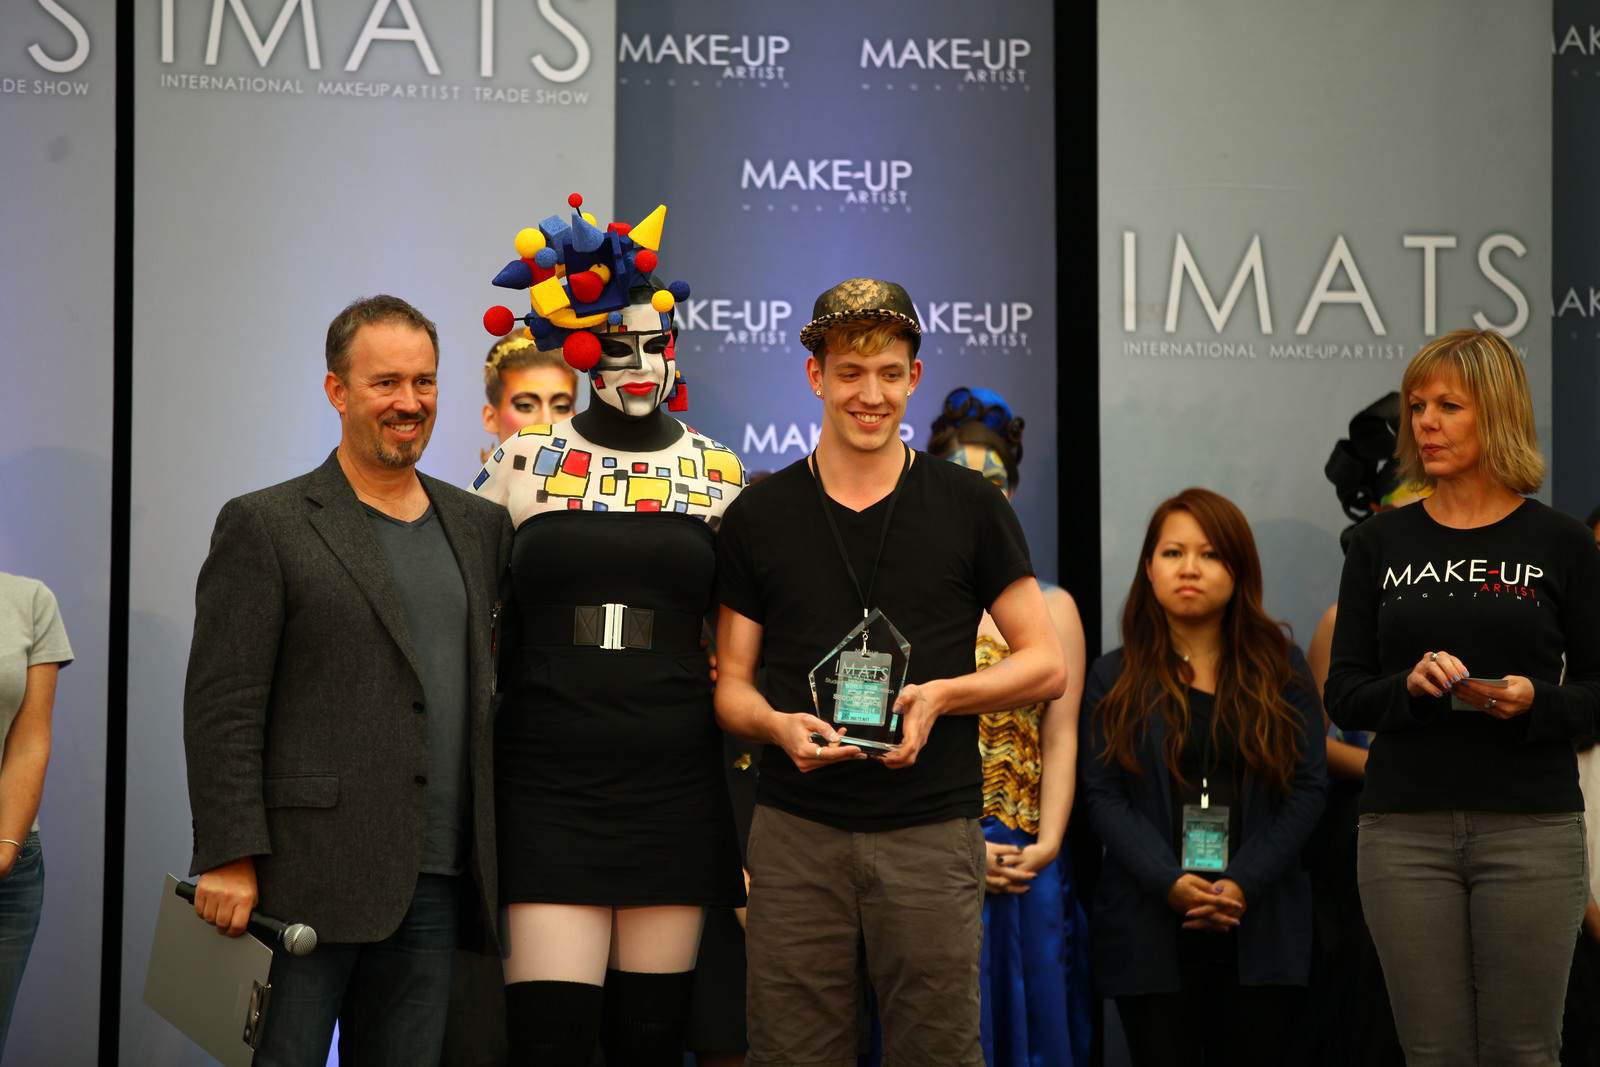 make up8 The International Make Up Artist Trade Show 2014, Vancouver